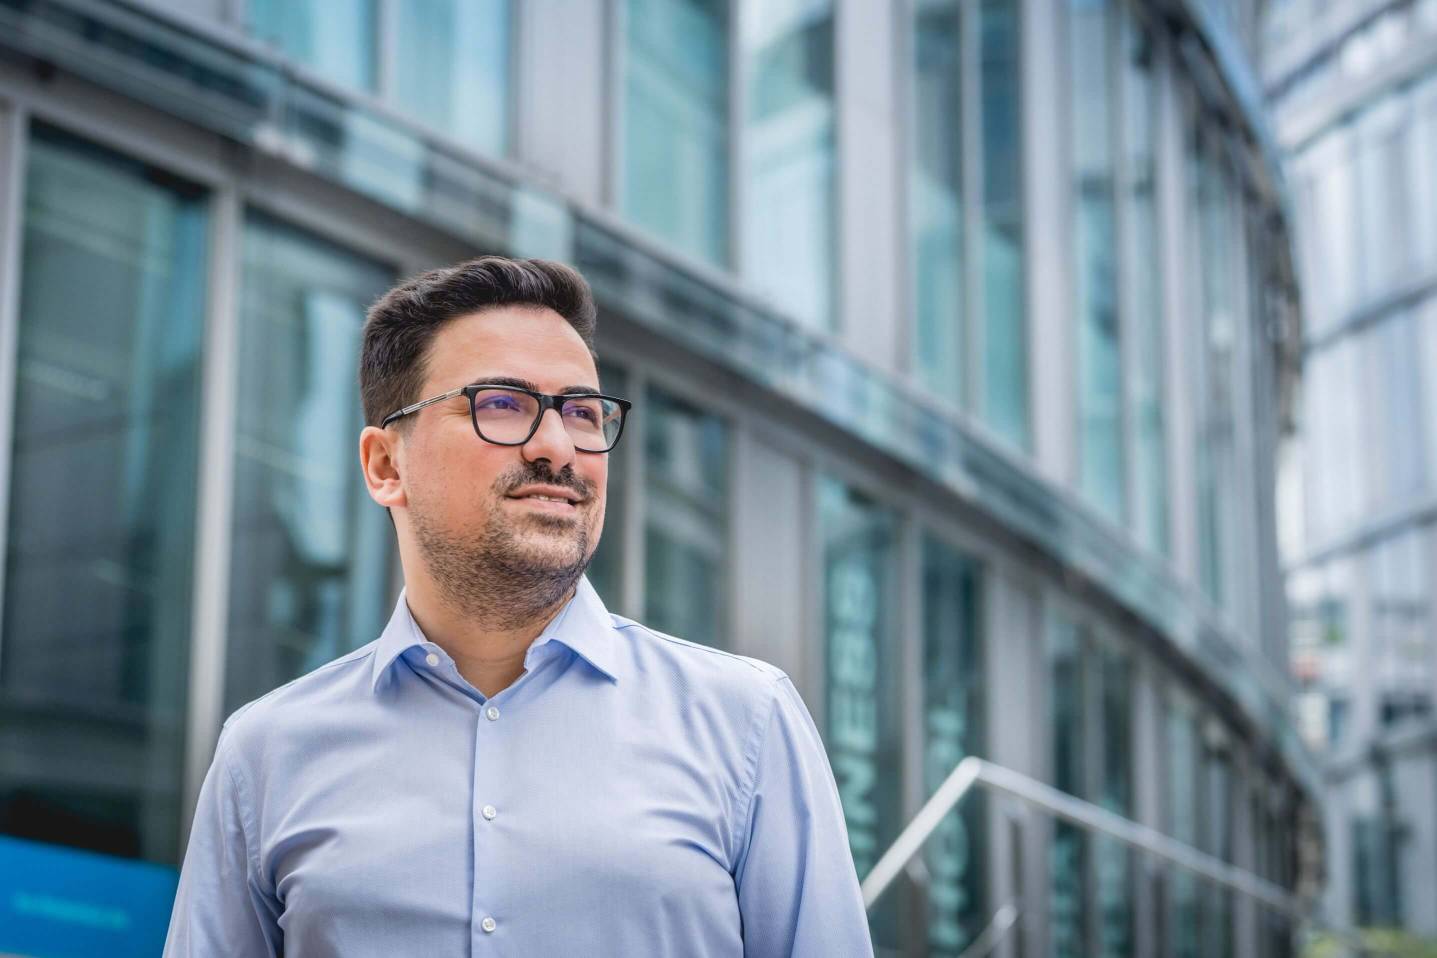 Mehmet Kayir - Dynamics 365 CE Architekt - Ex-Microsoft Architekt - CEO Leading Business Solution GmbH